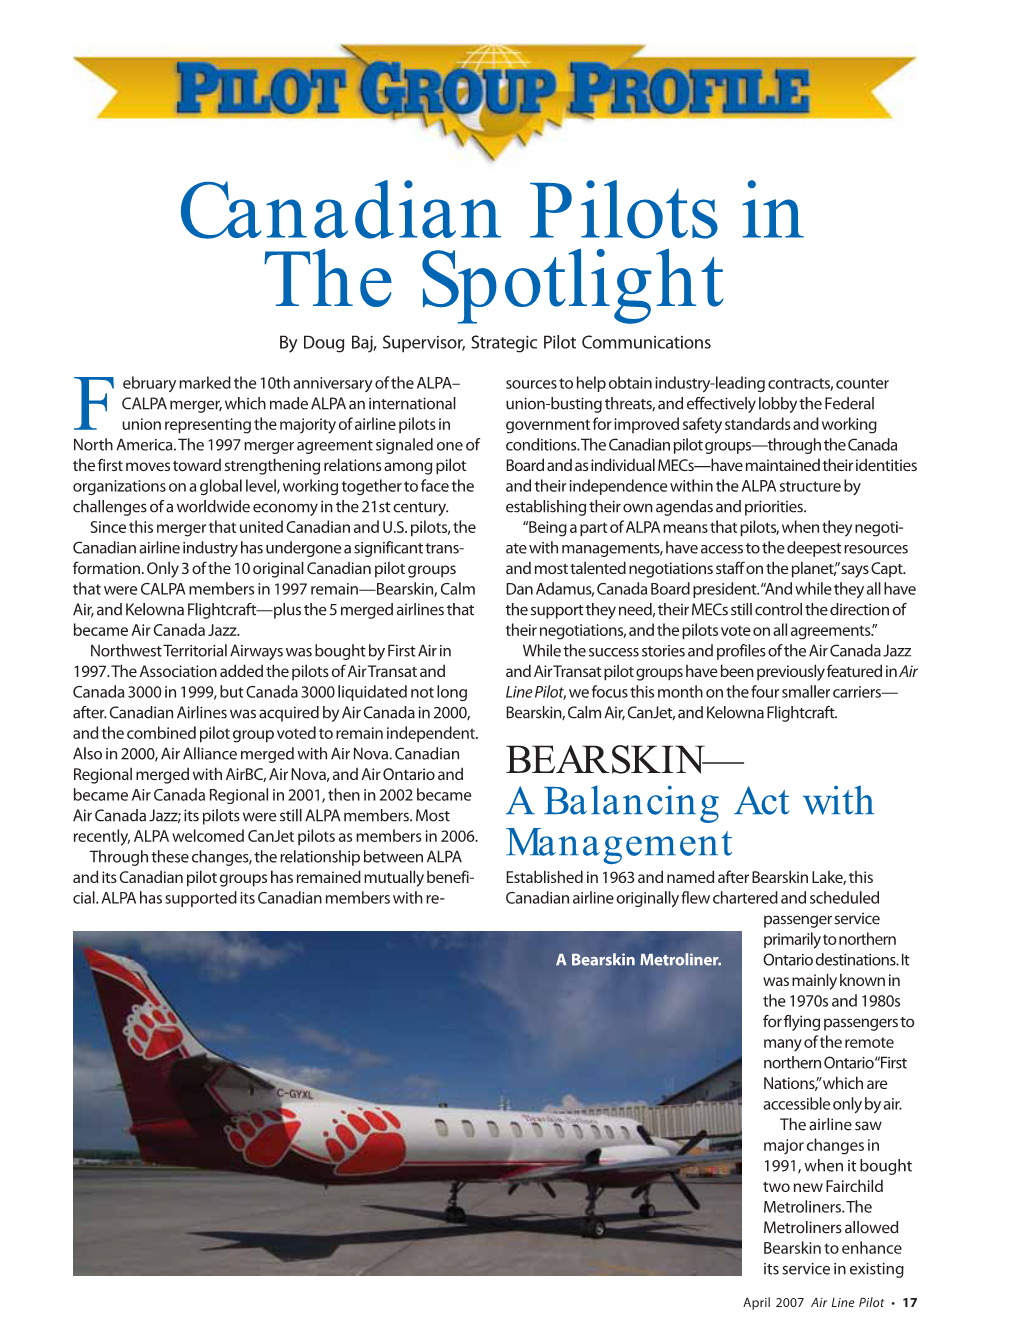 Canadian Pilots in the Spotlight by Doug Baj, Supervisor, Strategic Pilot Communications